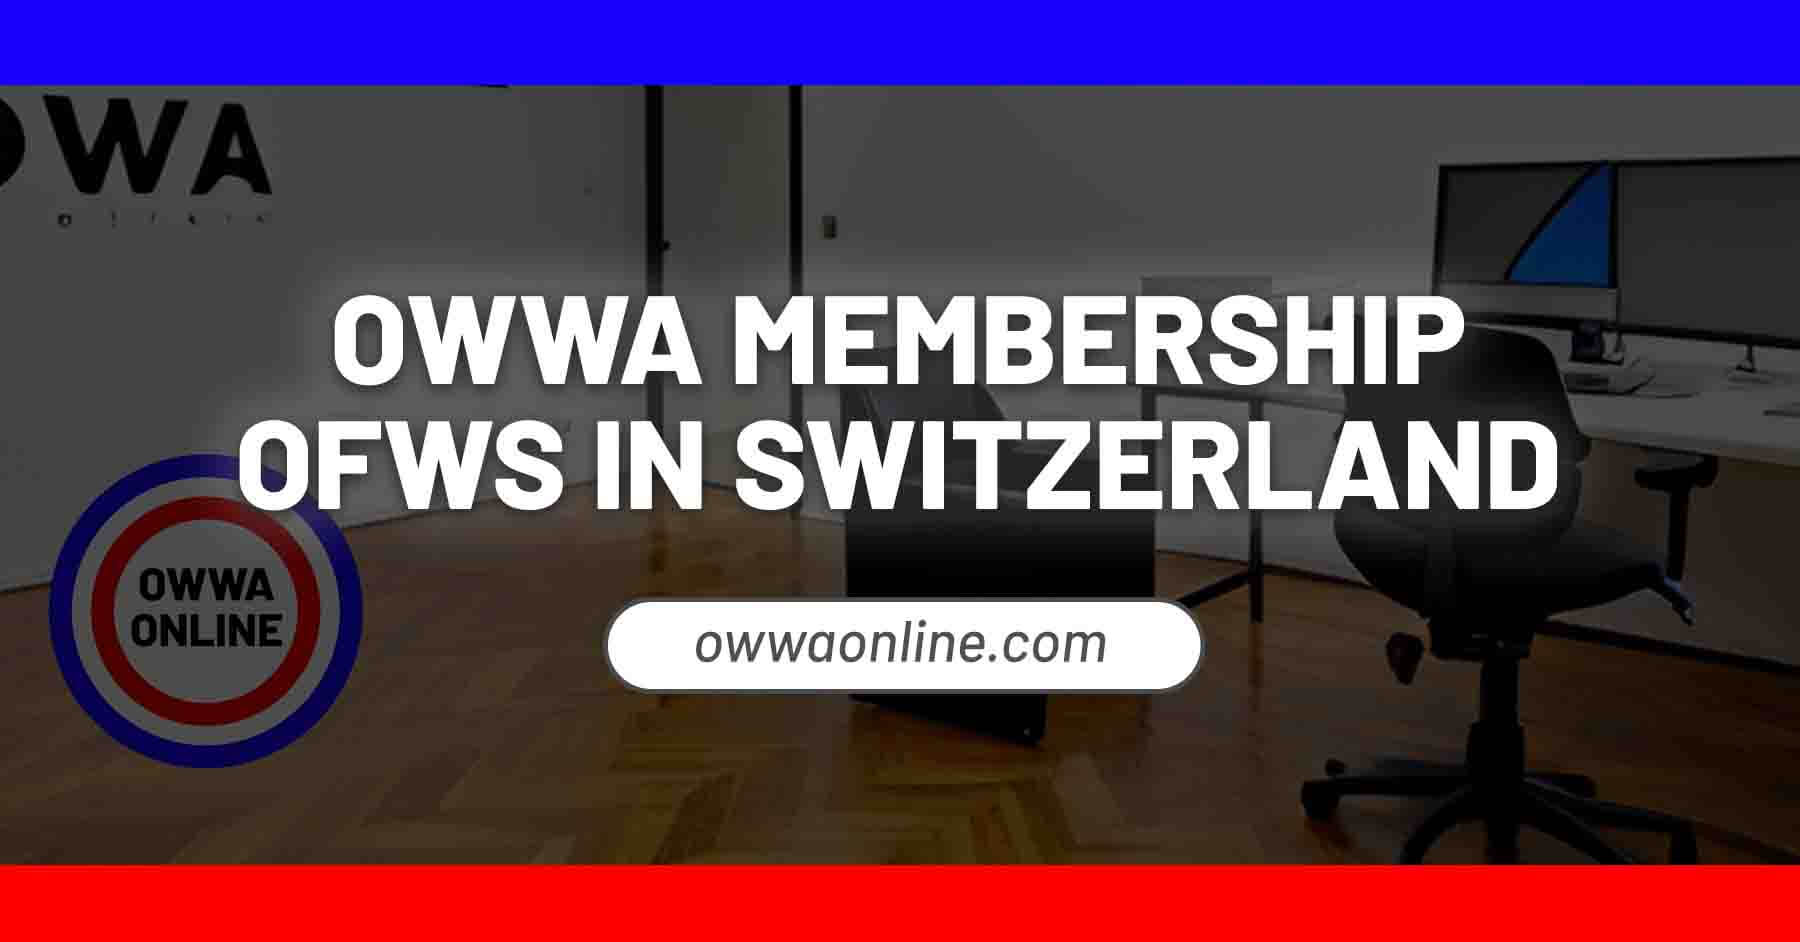 owwa membership application renewal in switzerland